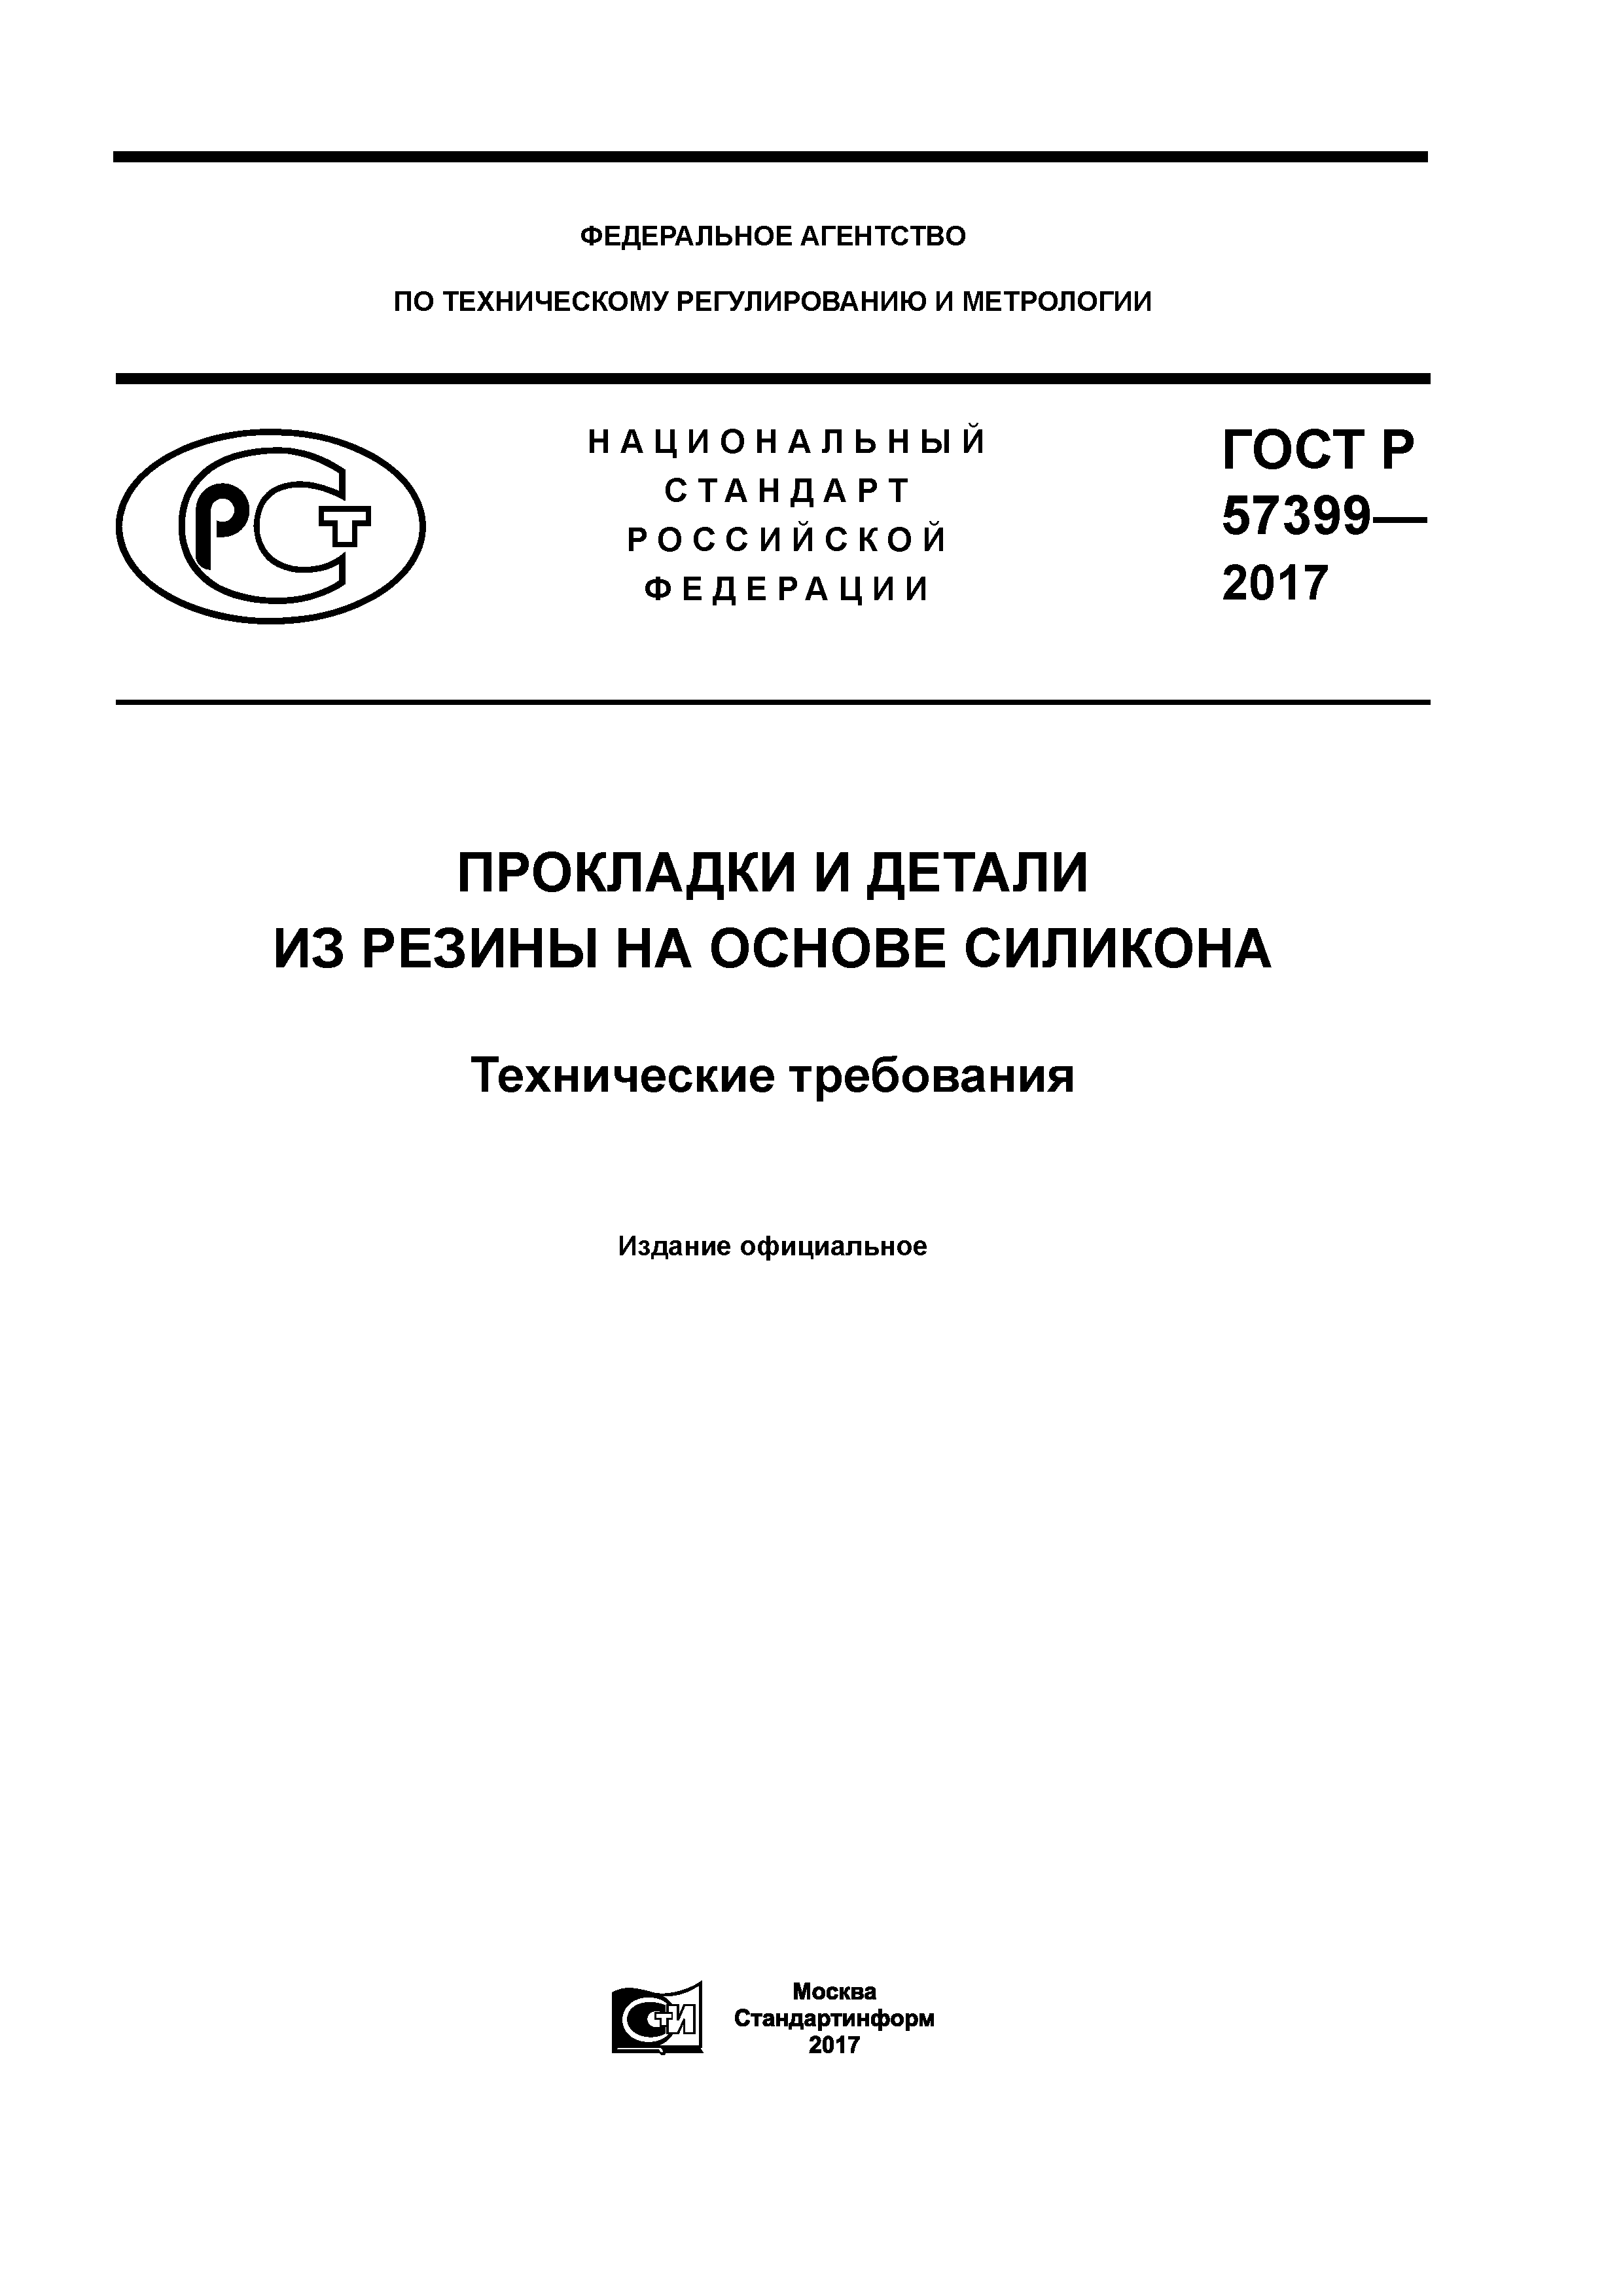 ГОСТ Р 57399-2017